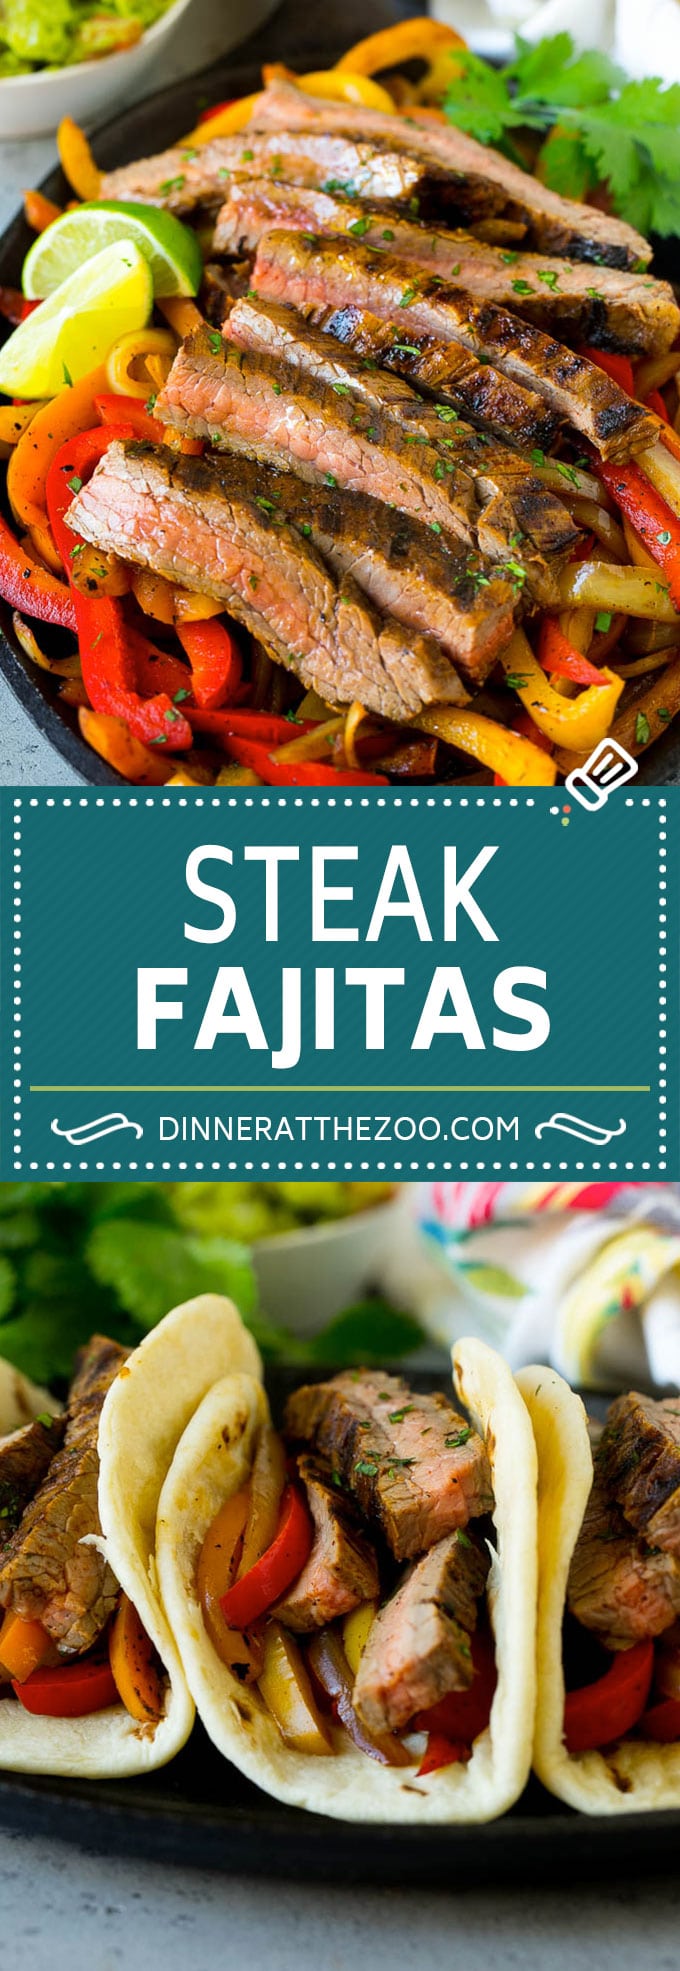 Steak Fajitas Recipe | Beef Fajitas | Steak Recipe #fajitas #steak #beef #mexicanfood #dinner #dinneratthezoo